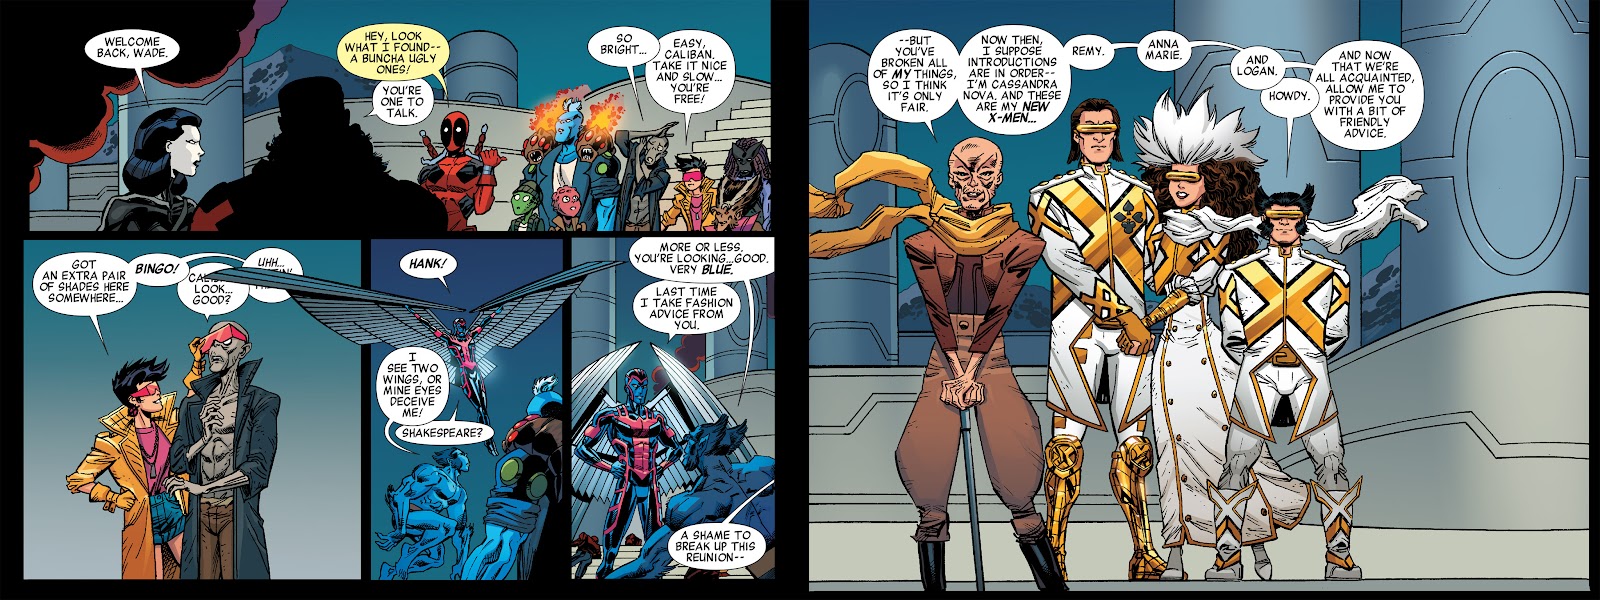 X-Men '92 (Infinite Comics) issue 6 - Page 21